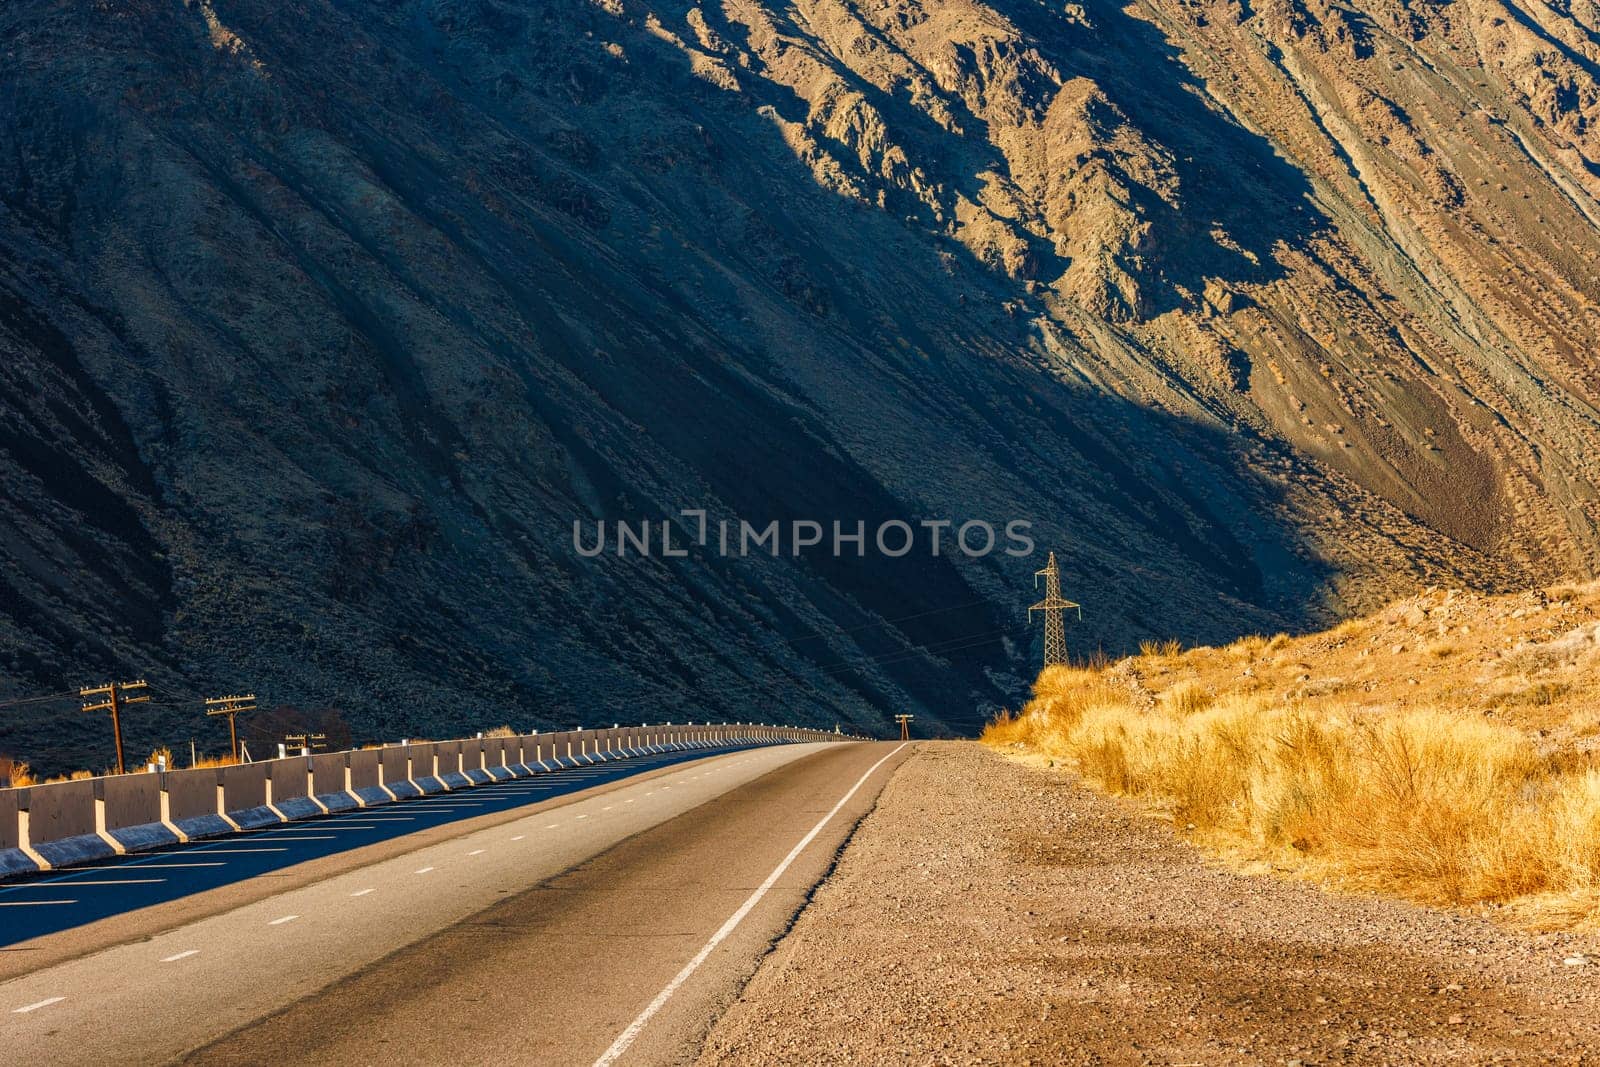 Desolate asphalt thoroughfare cuts through mountainous natural landscape by z1b